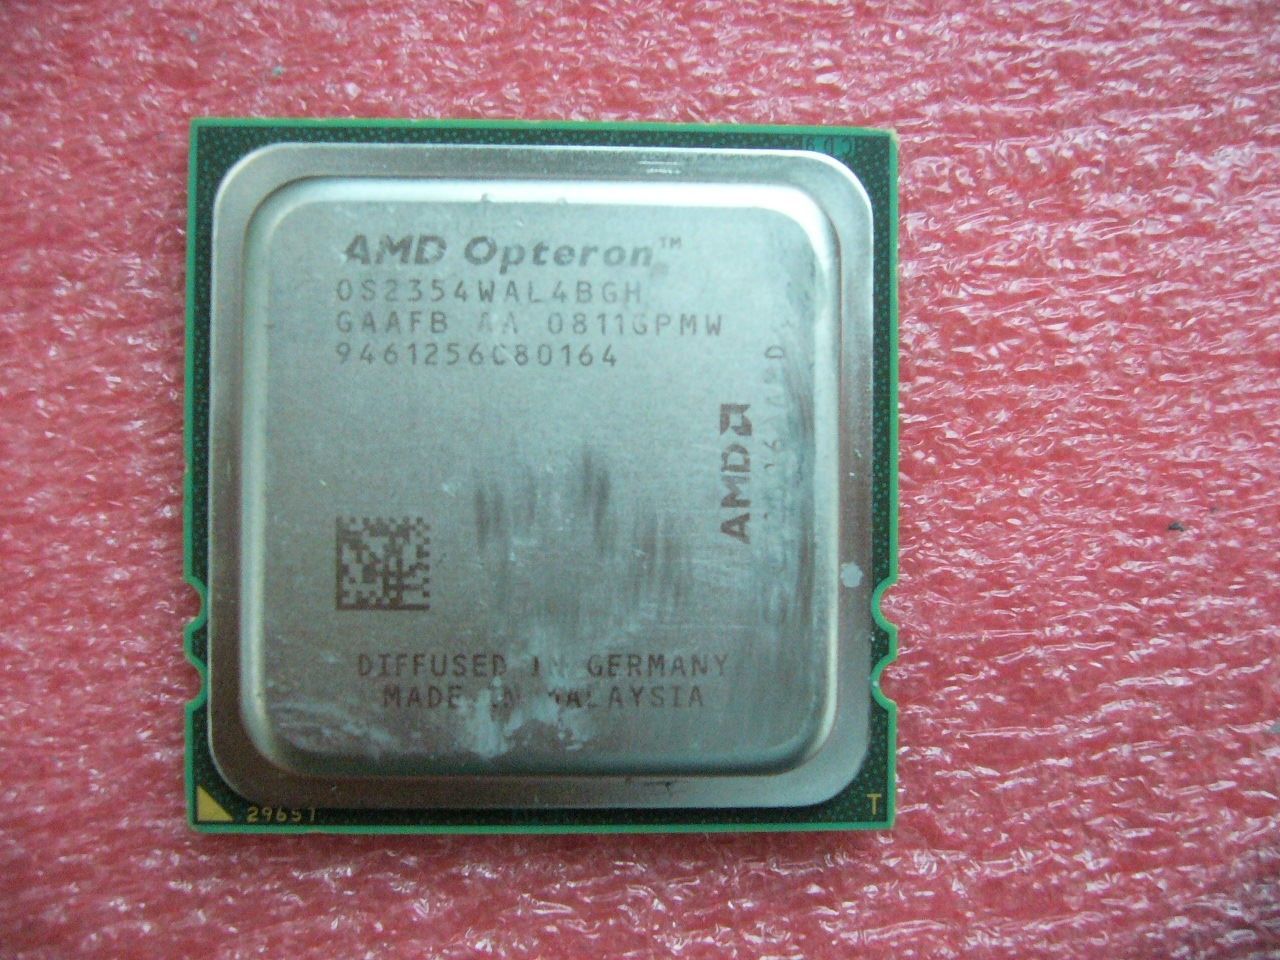 QTY 1x AMD Opteron 2354 2.2 GHz Quad-Core (OS2354WAL4BGH) CPU Socket F 1207